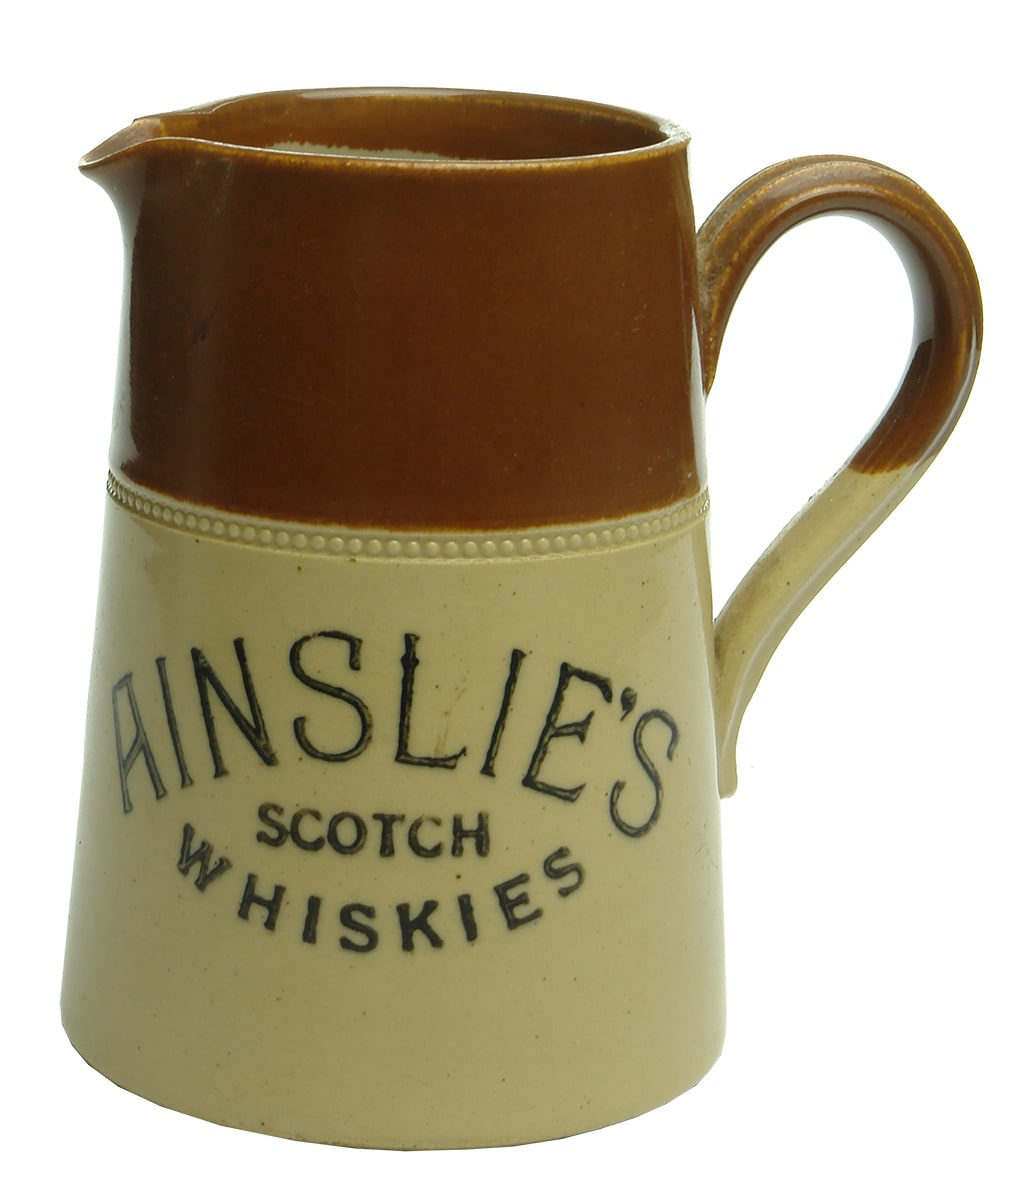 Ainslie's Scotch Whiskies Antique Advertising Water Jug